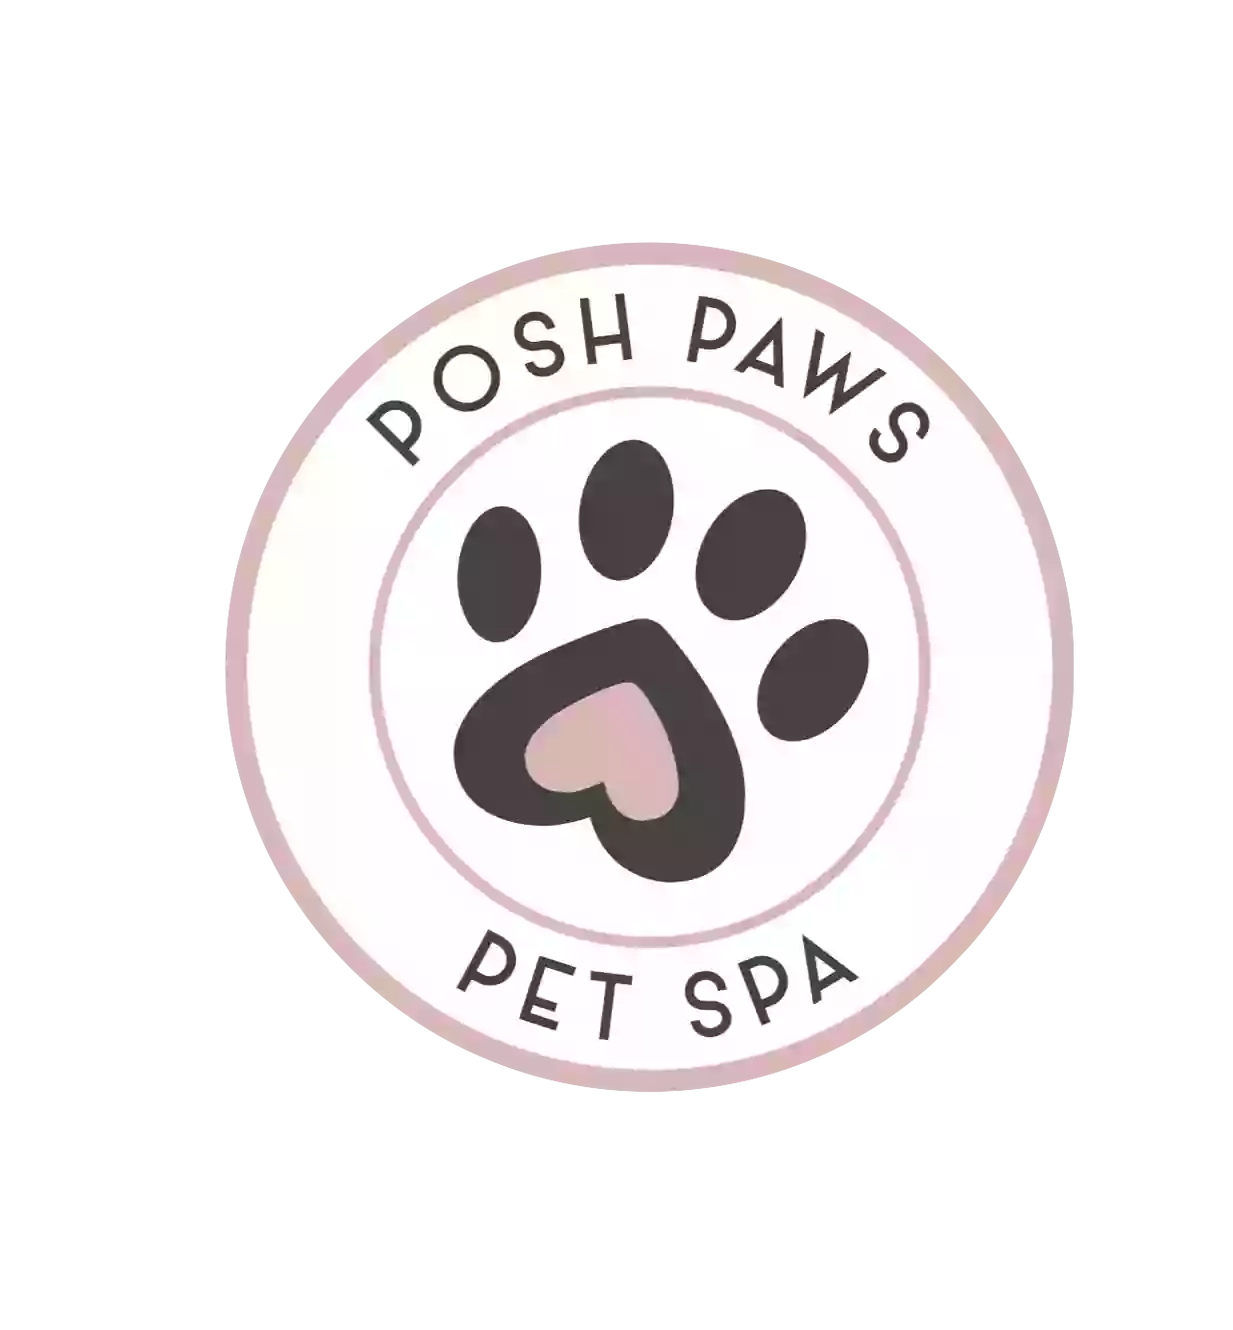 Posh Paws Pet Spa